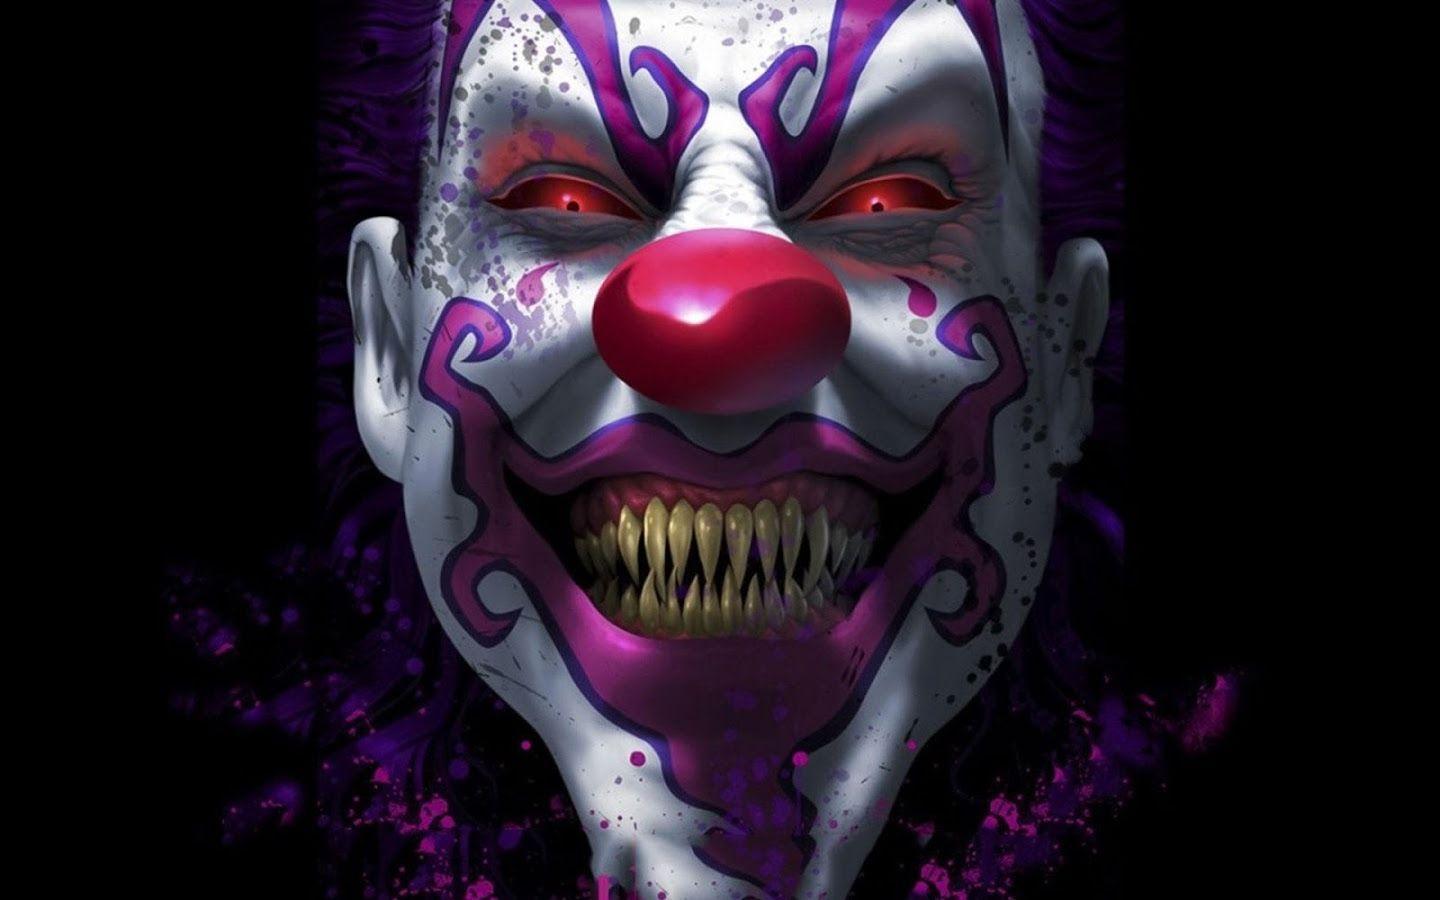 Killer Clown Live Wallpaper